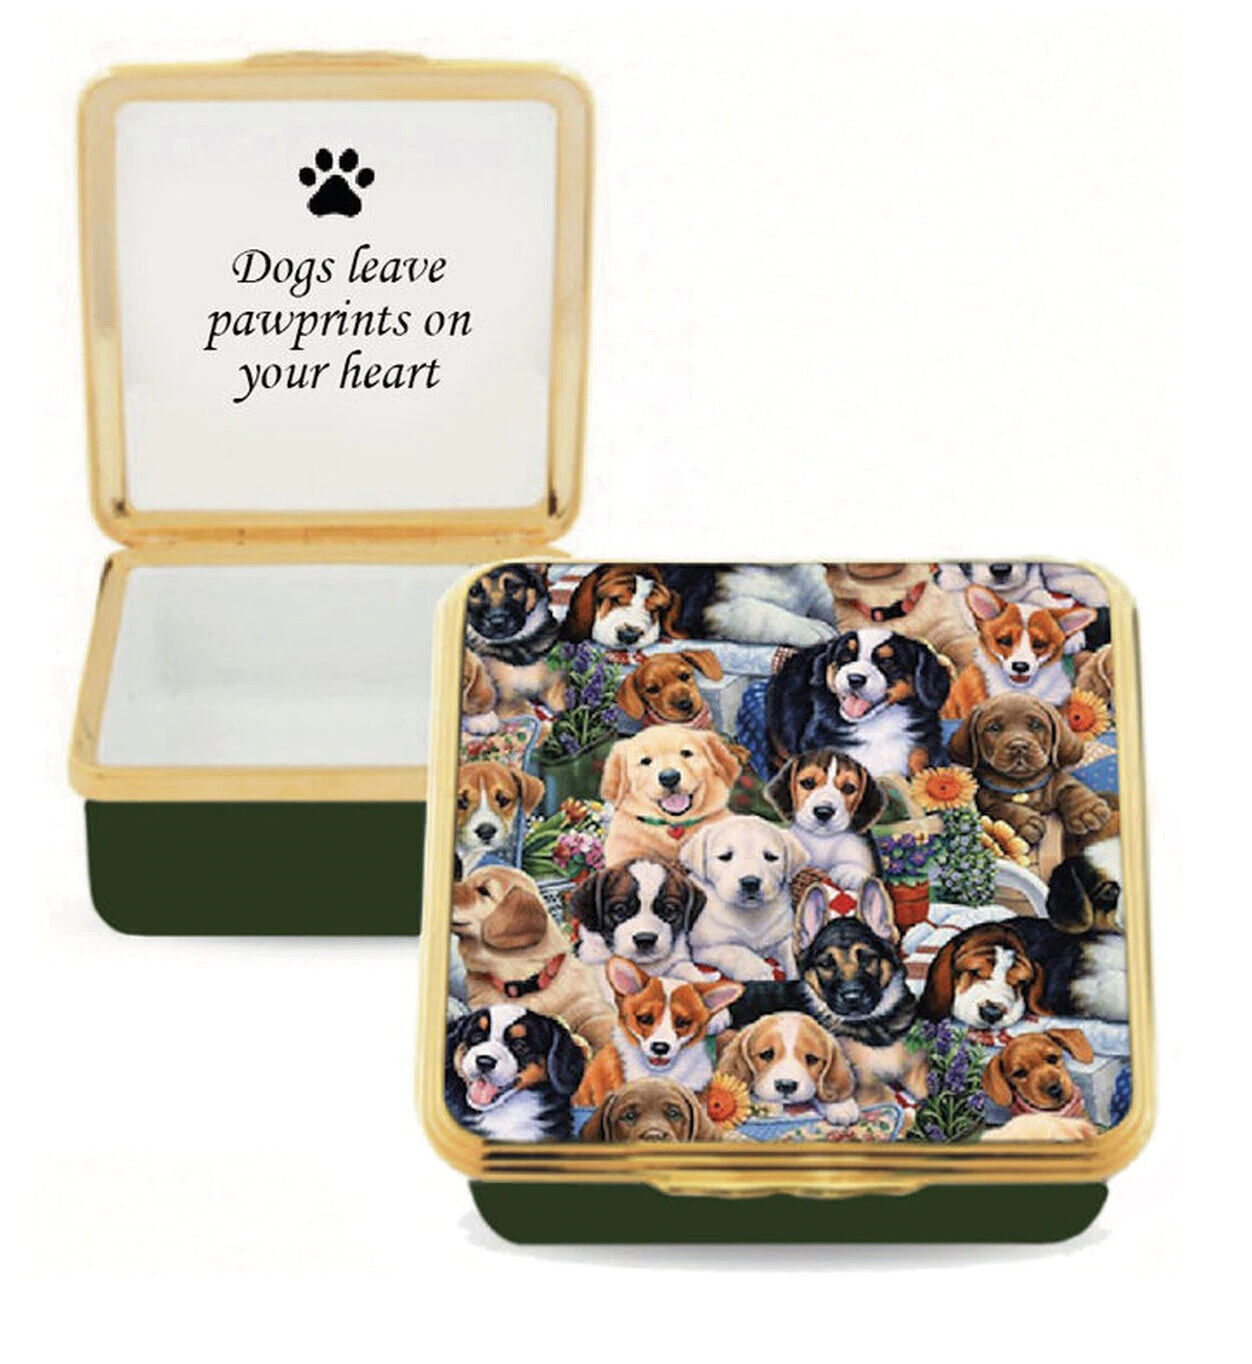 HALCYON DAYS DOGS LEAVE PAWPRINTS ON YOUR HEART BOX #ENDPP1258G BRAND NIB SAVE$